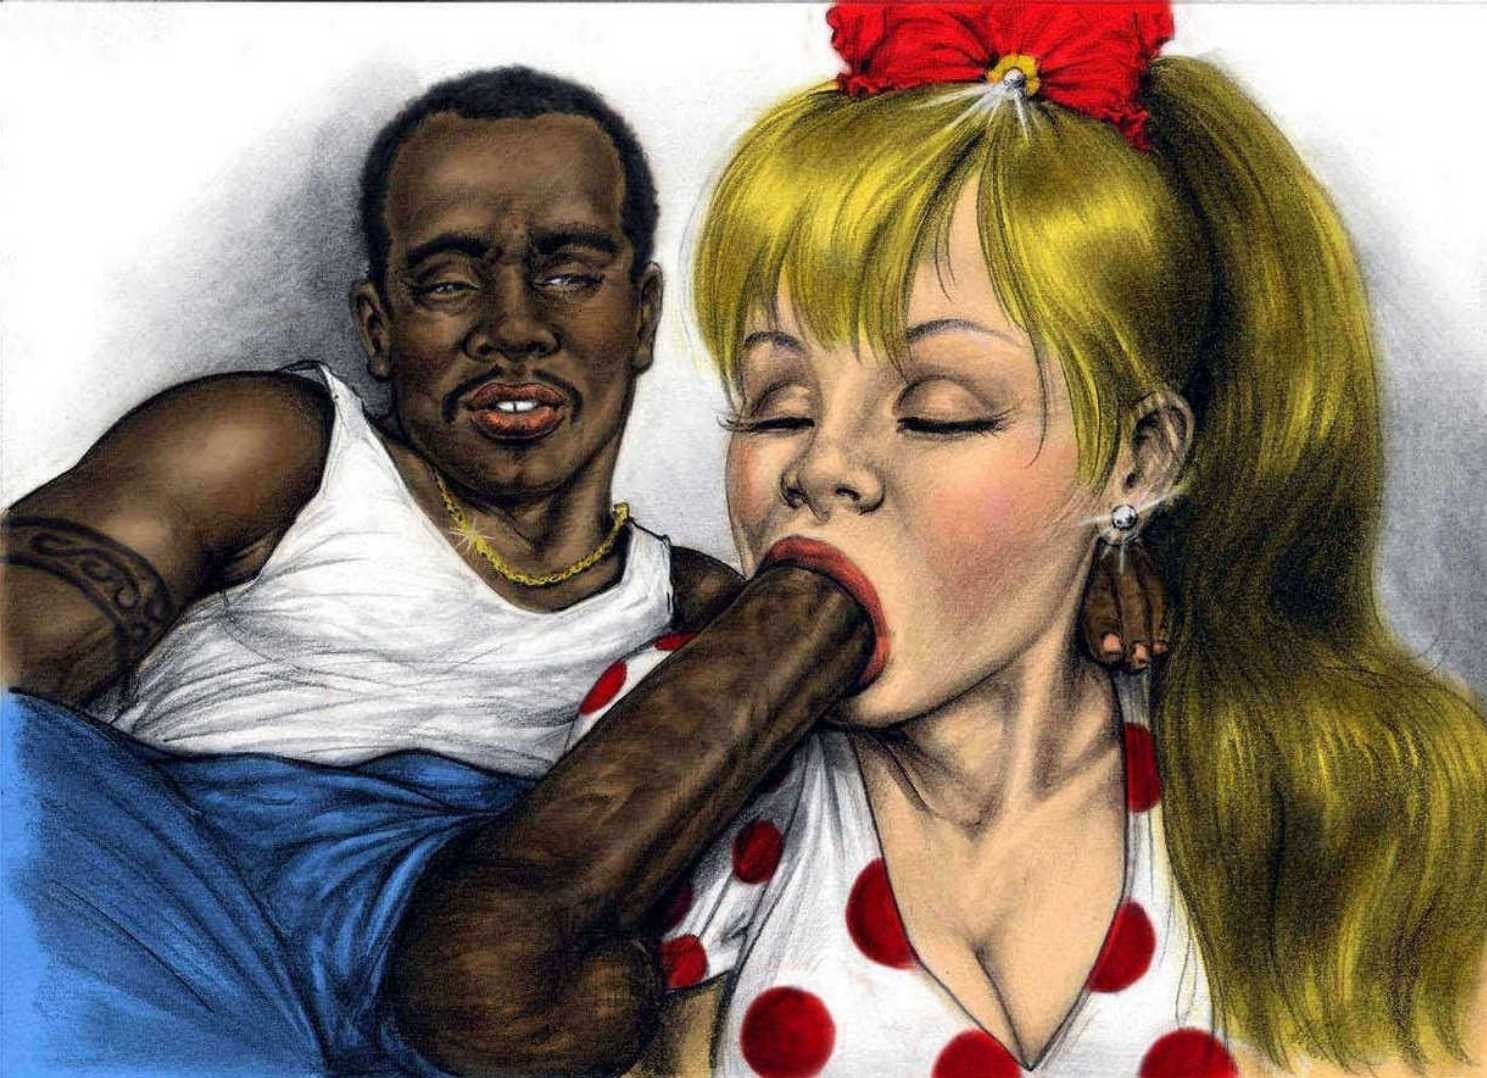 Cartoon erotic interracial